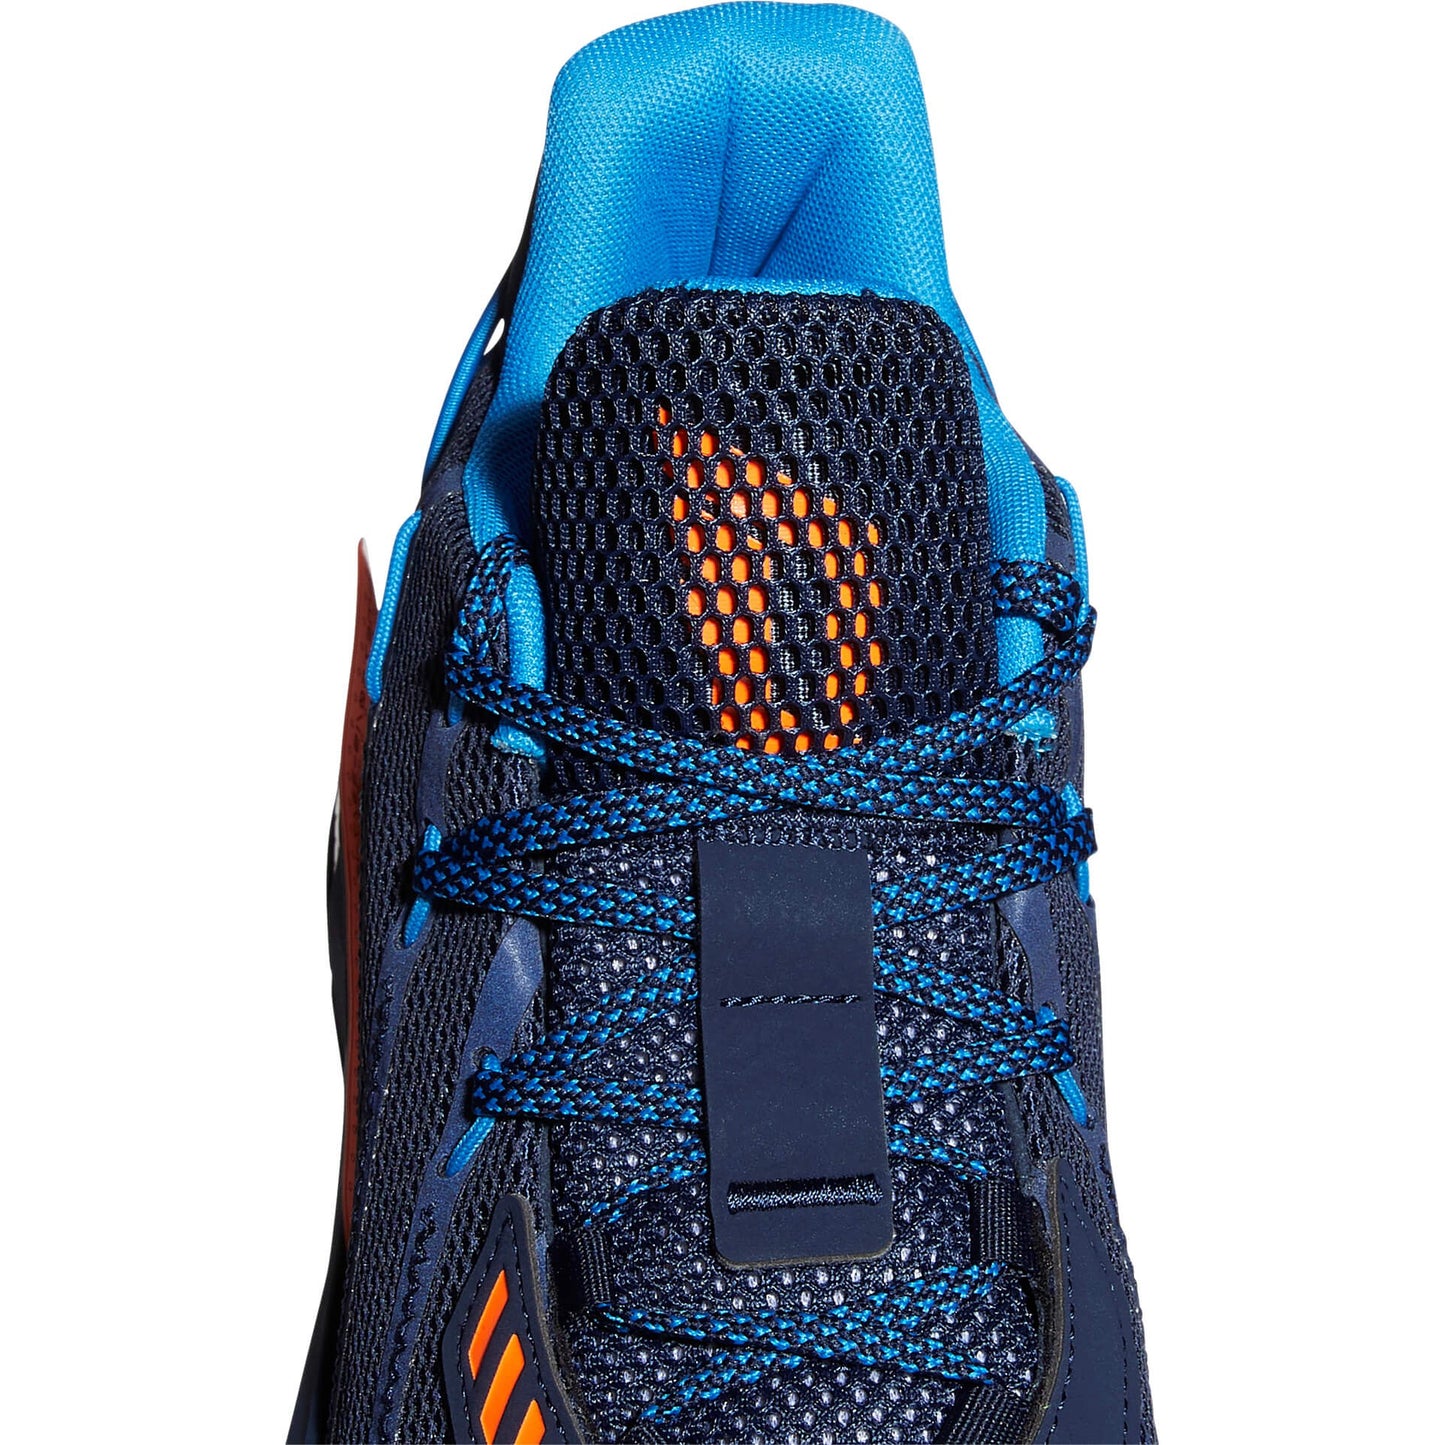 Adidas Dame 7 GCA navy/blue/orange